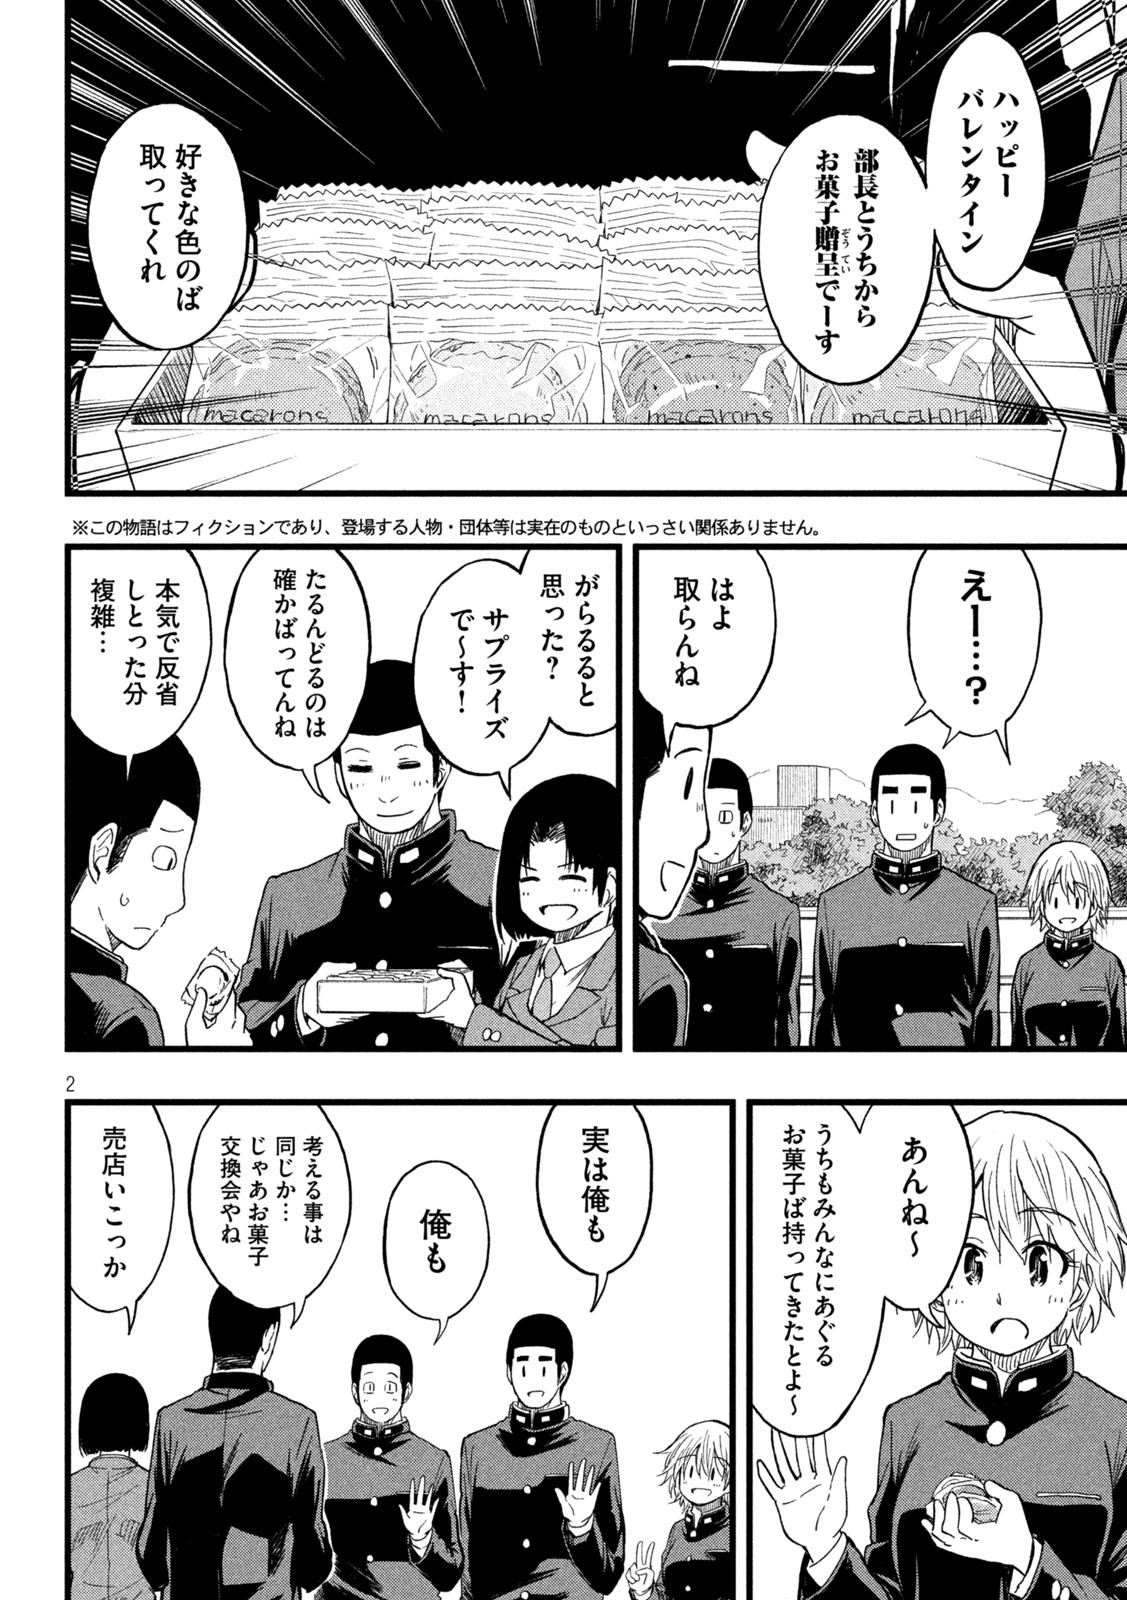 Koharu haru! - Chapter 87 - Page 2